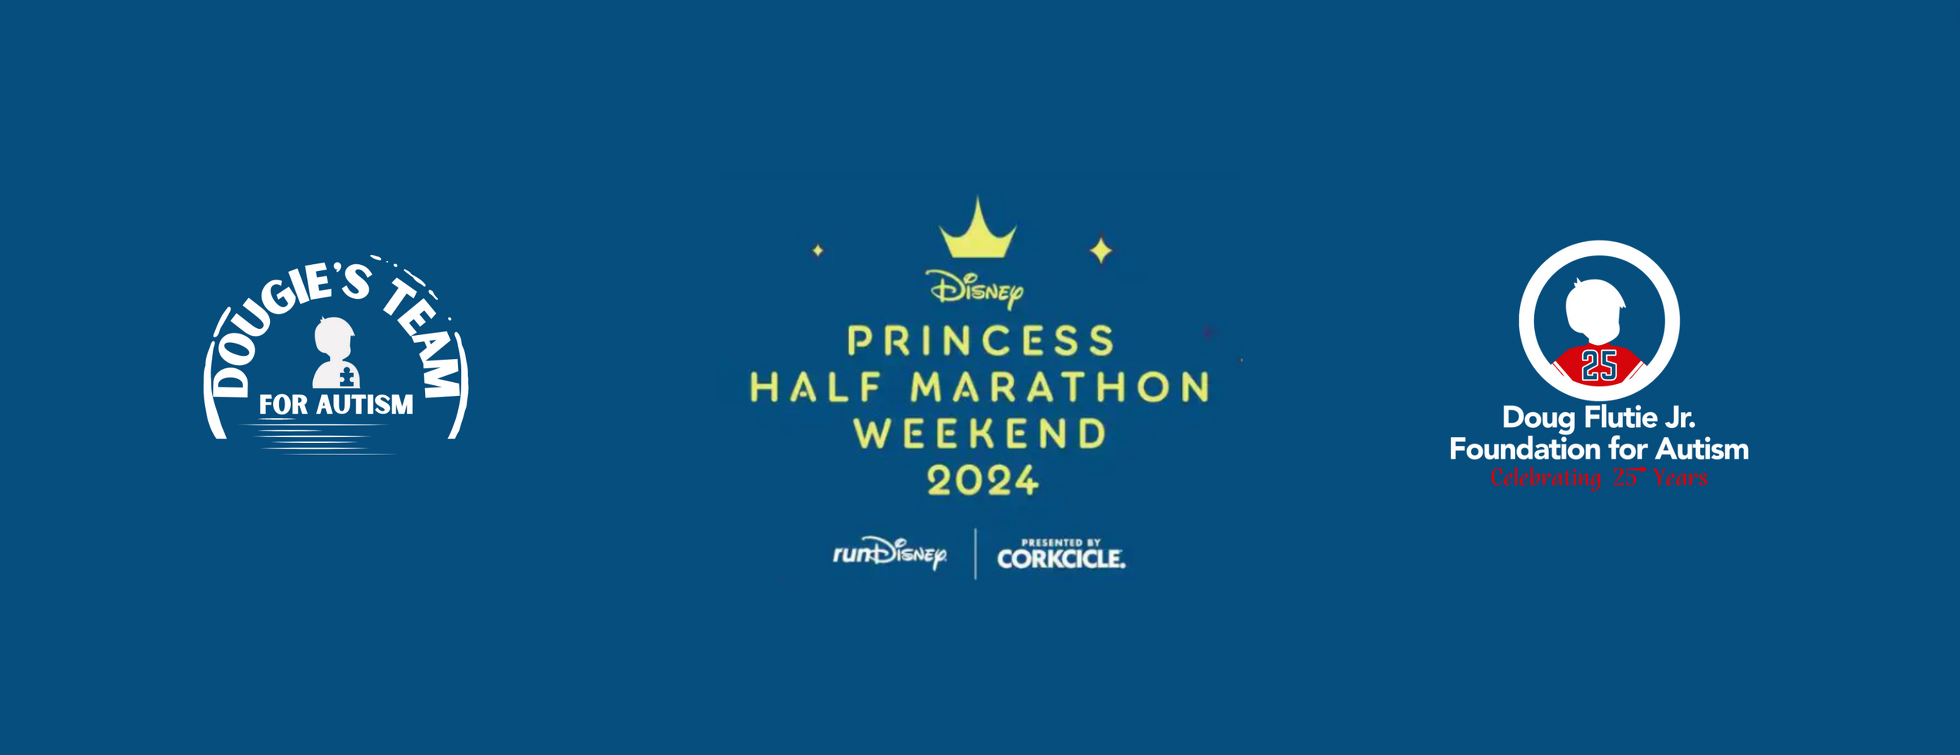 2024 Disney Princess Half Marathon Weekend